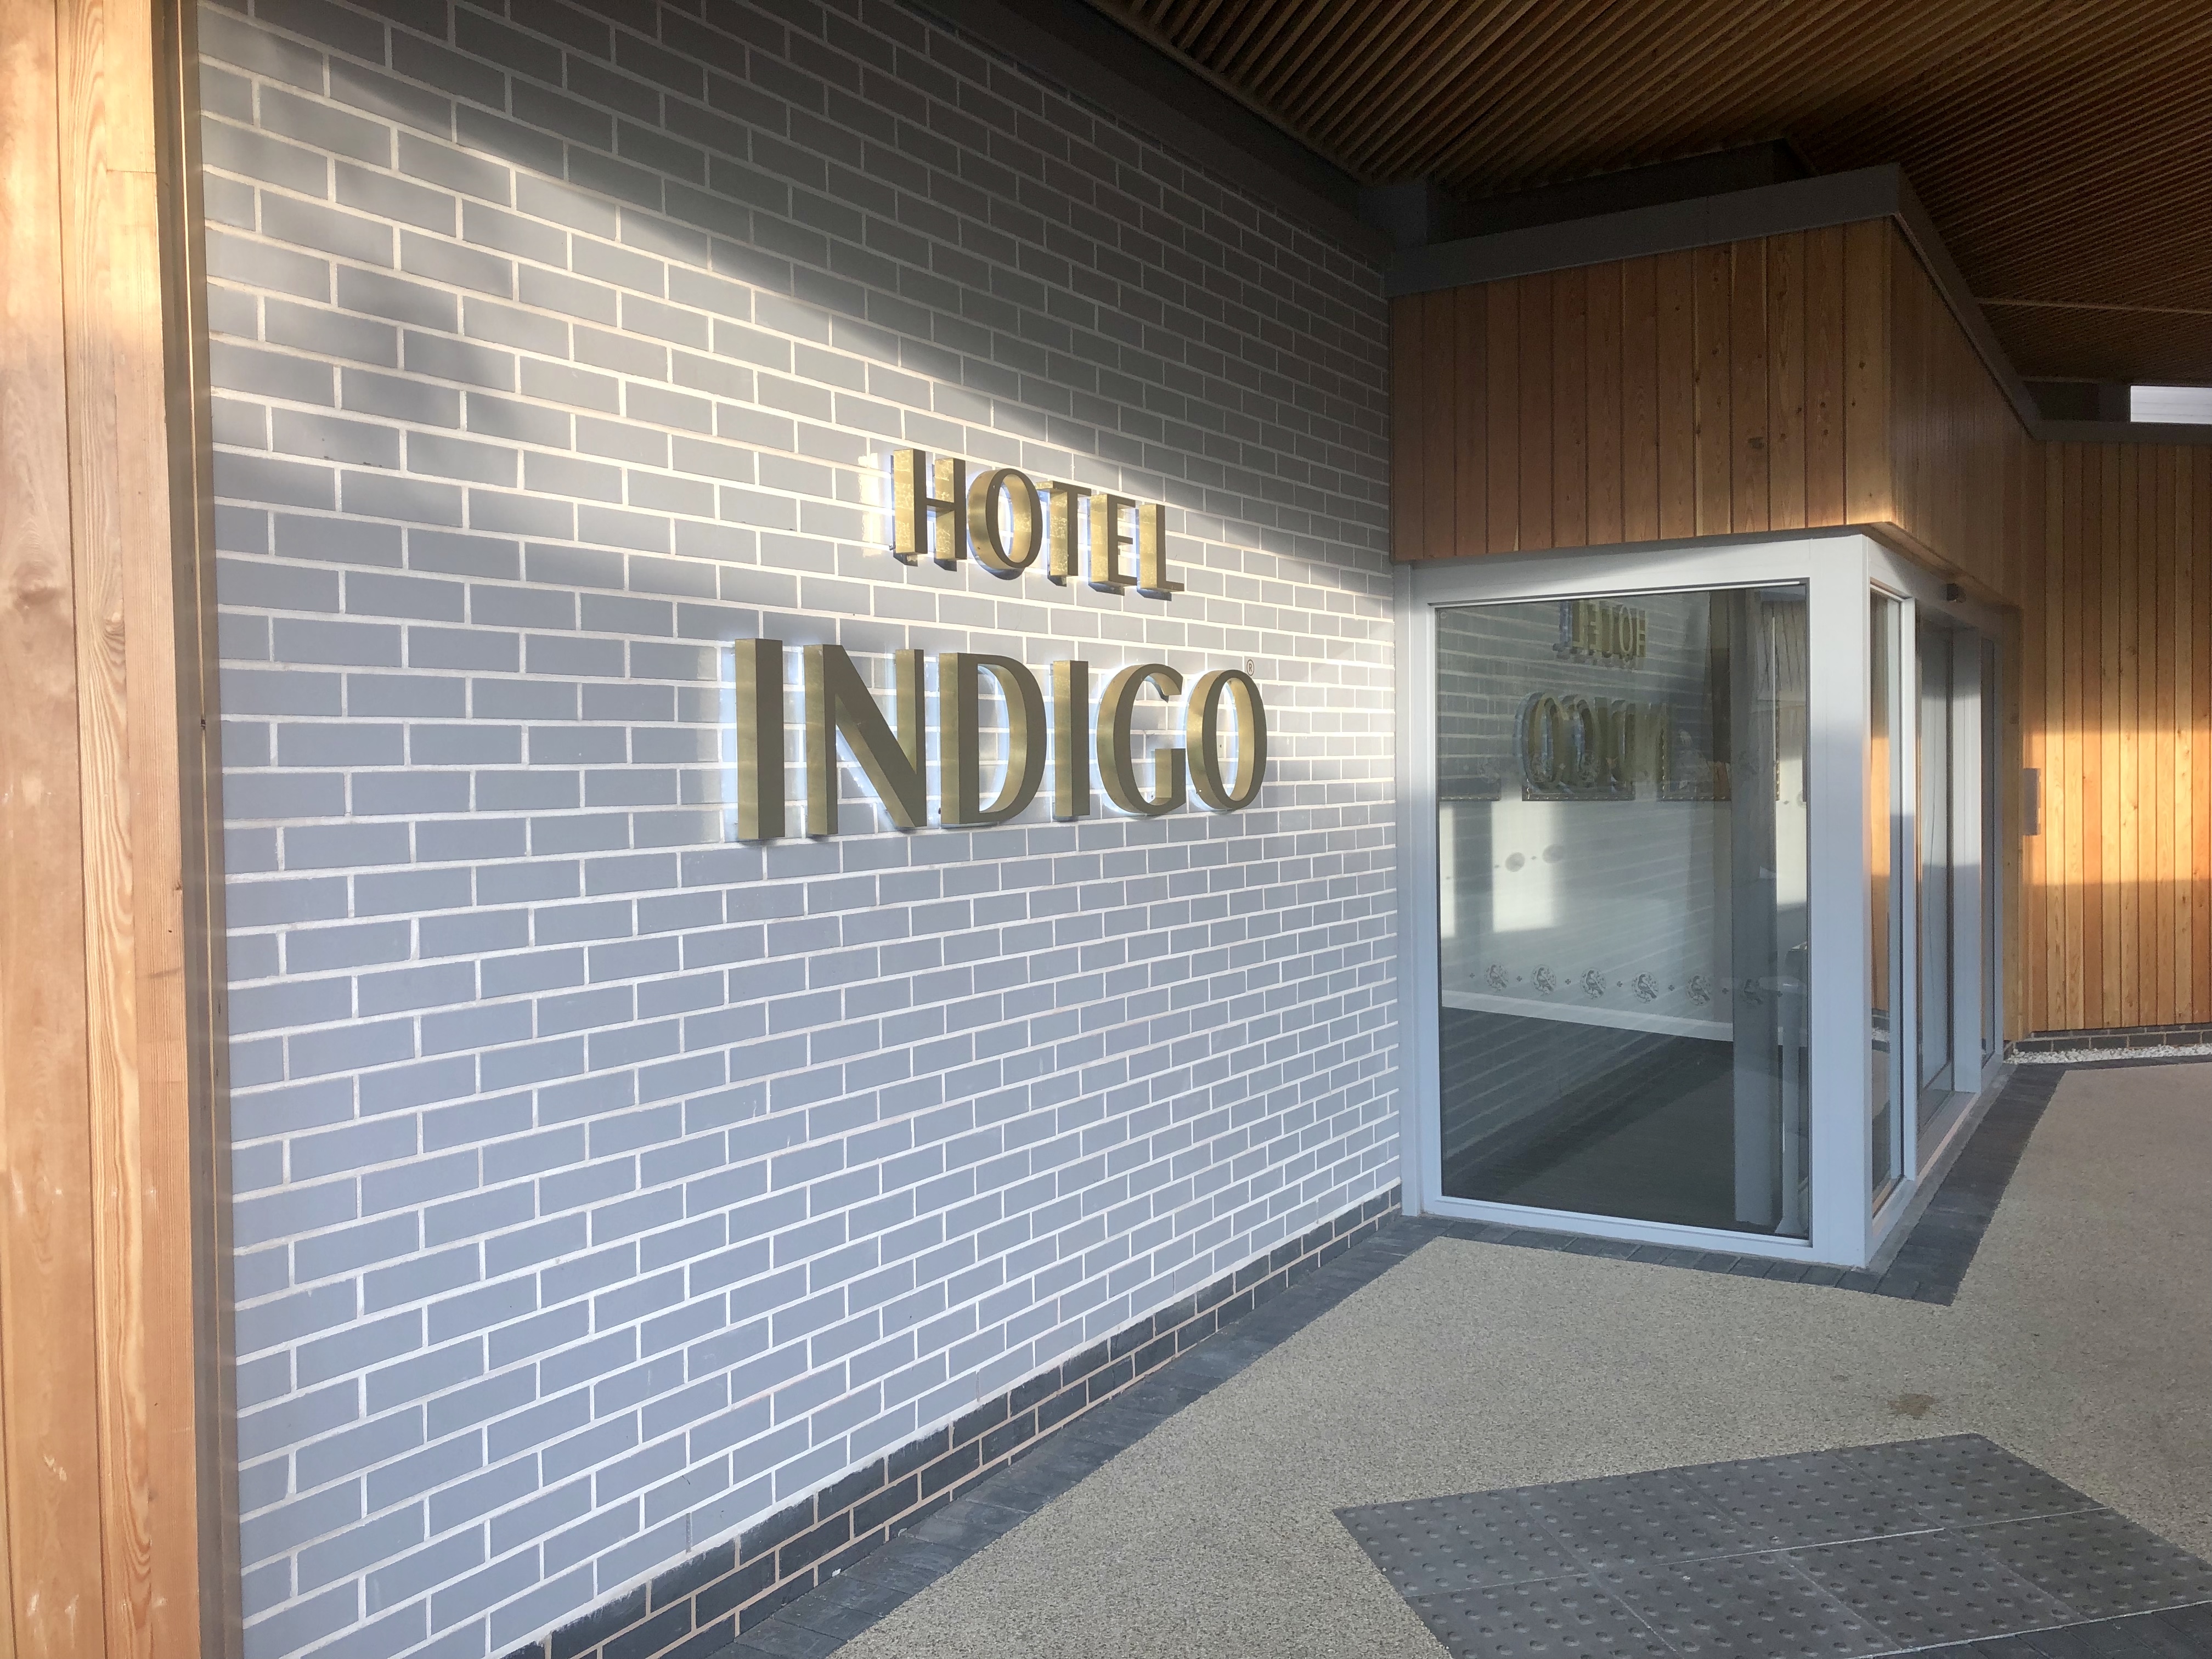 Hotel Indigo Commercial Solution